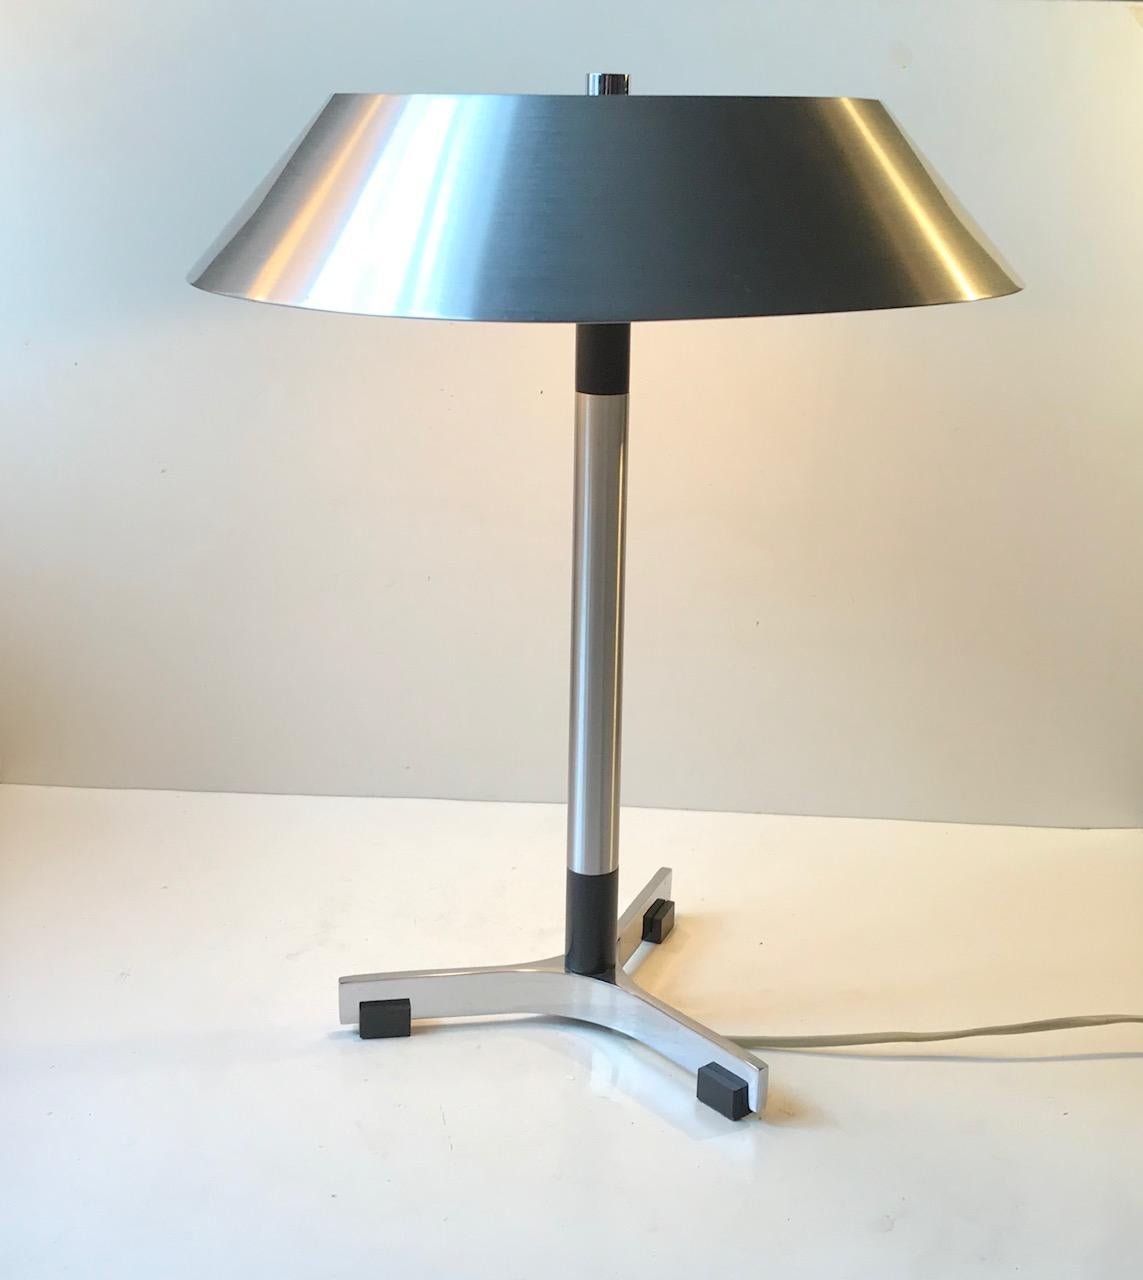 A True Danish mid-century desk lamp called 